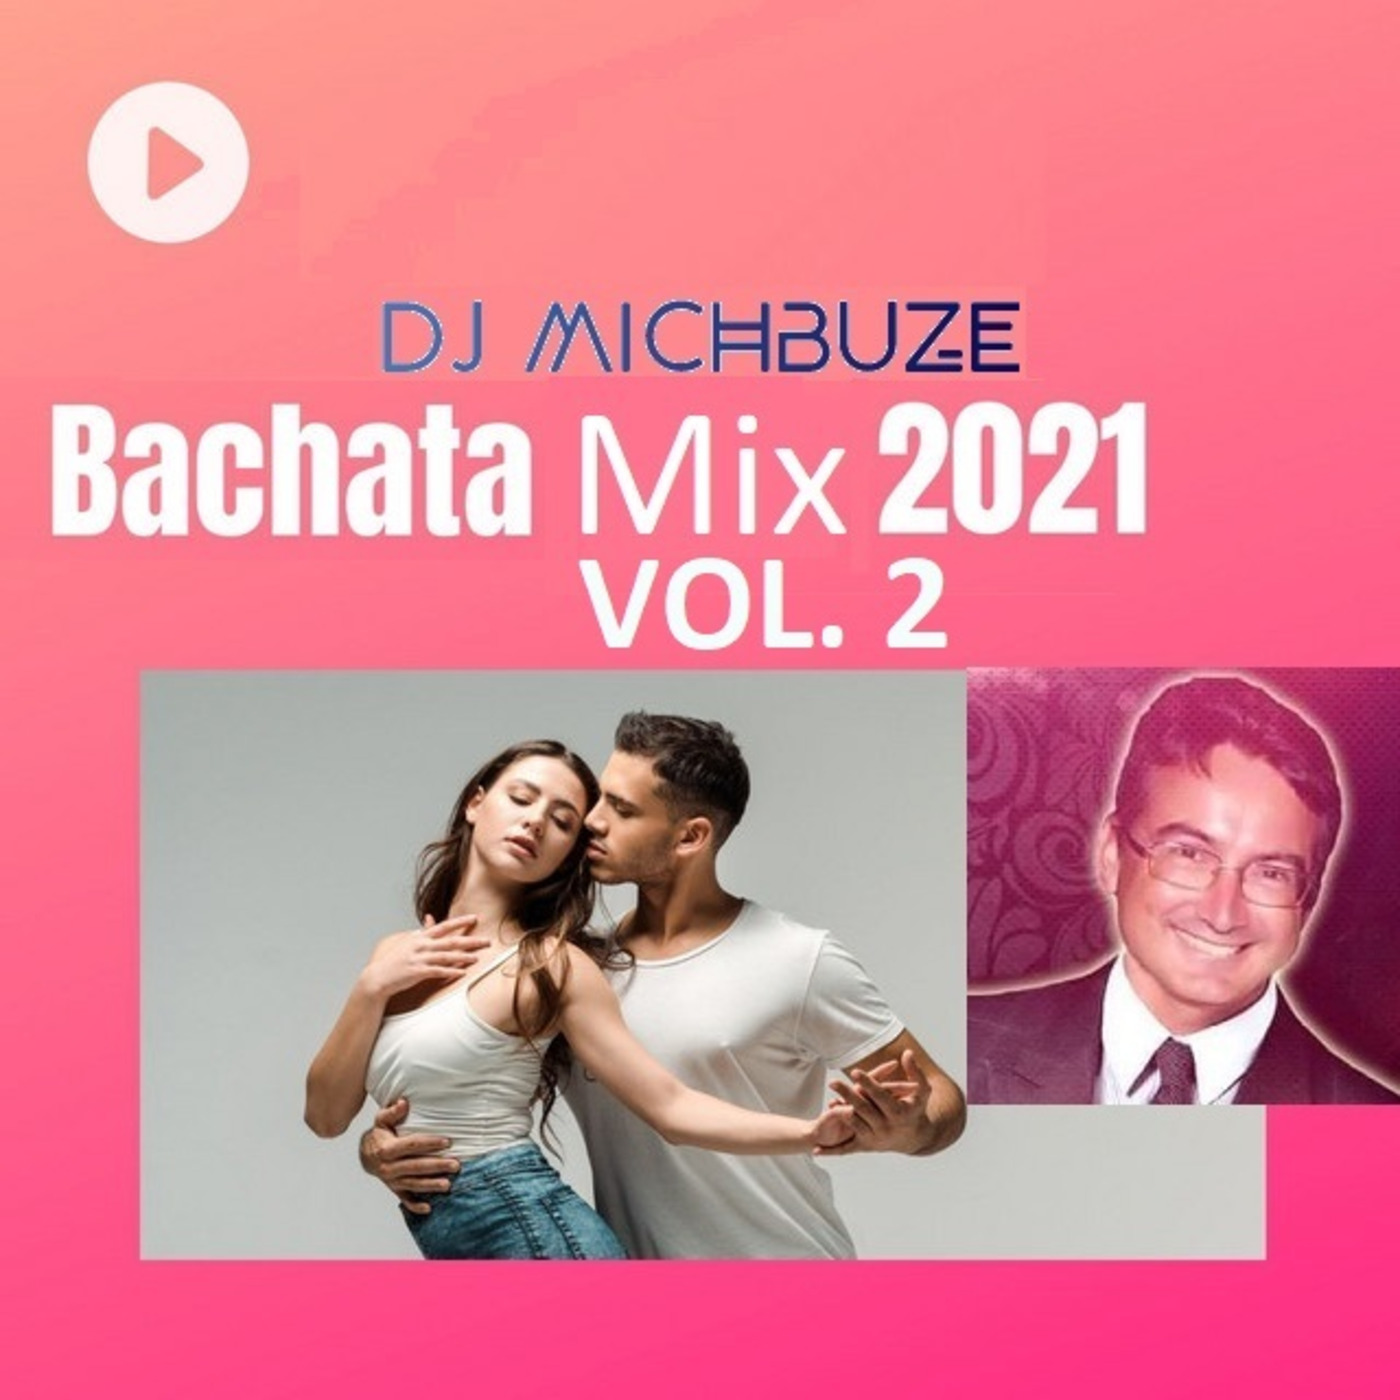 DJ michbuze - Bachata mix best of 2021 vol 2